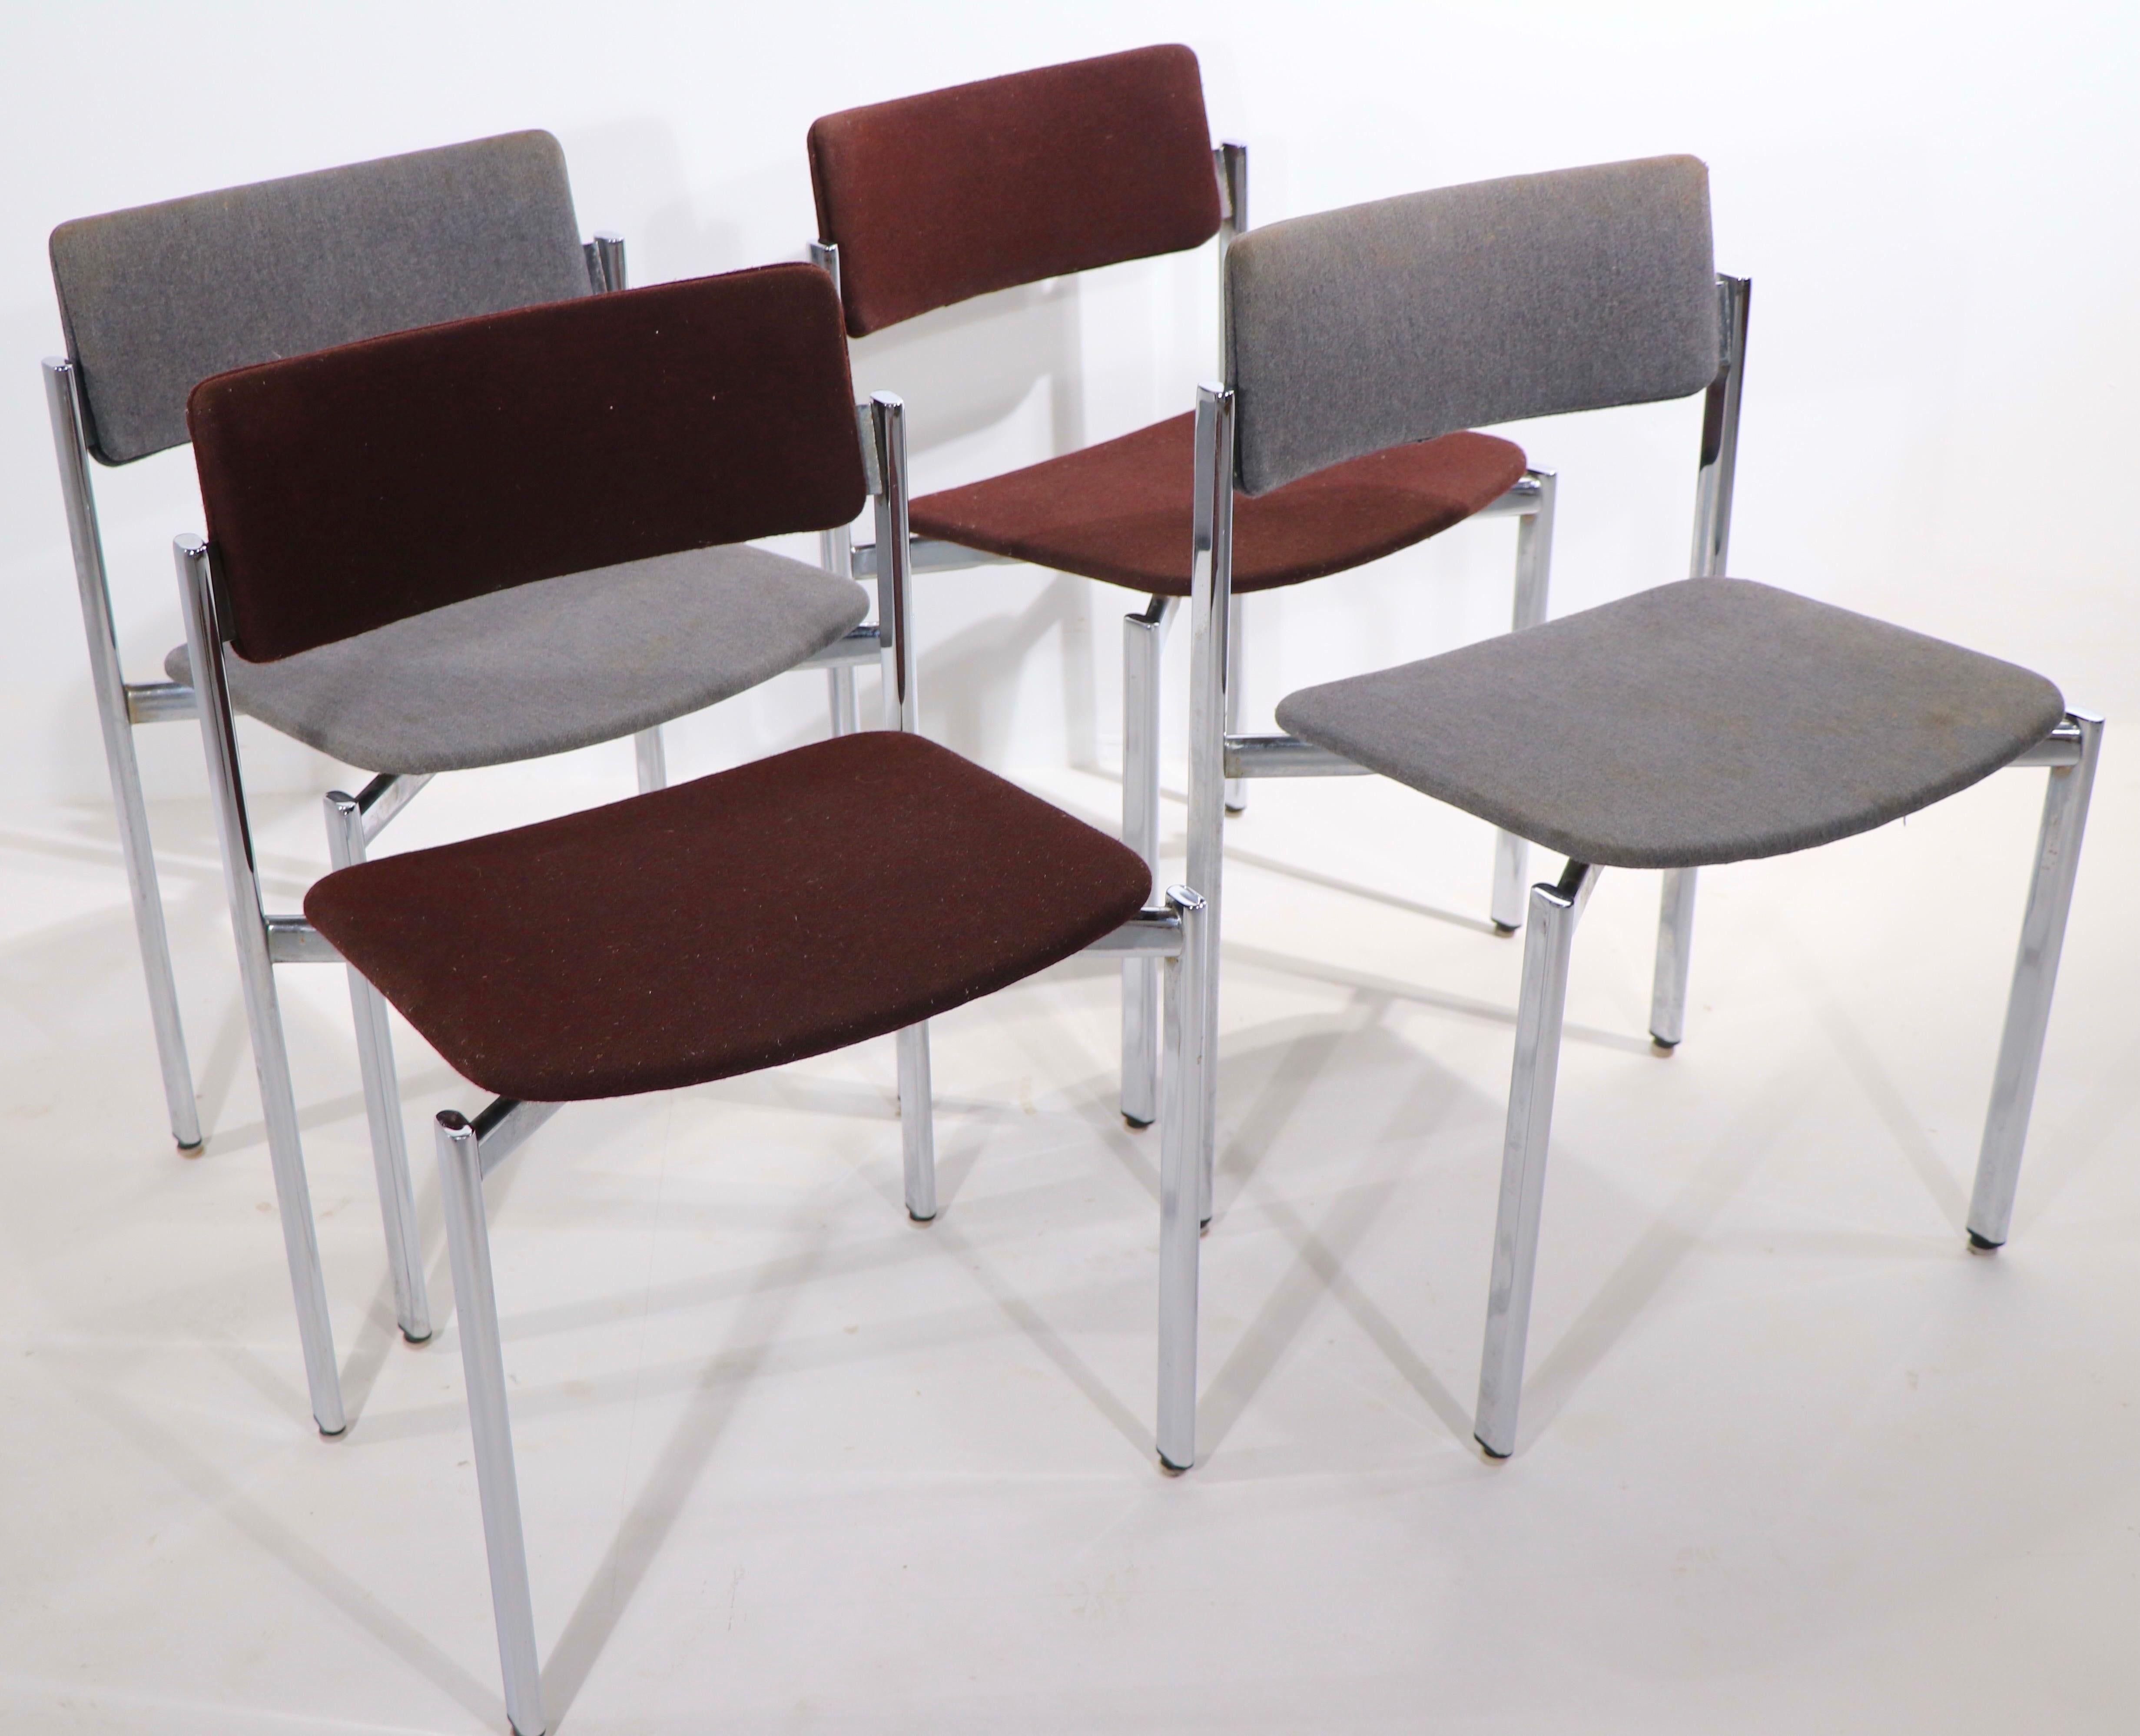 Finnish Set of 4 Kiki Chairs Designed by Ilmari Tapiovaara for Stendig